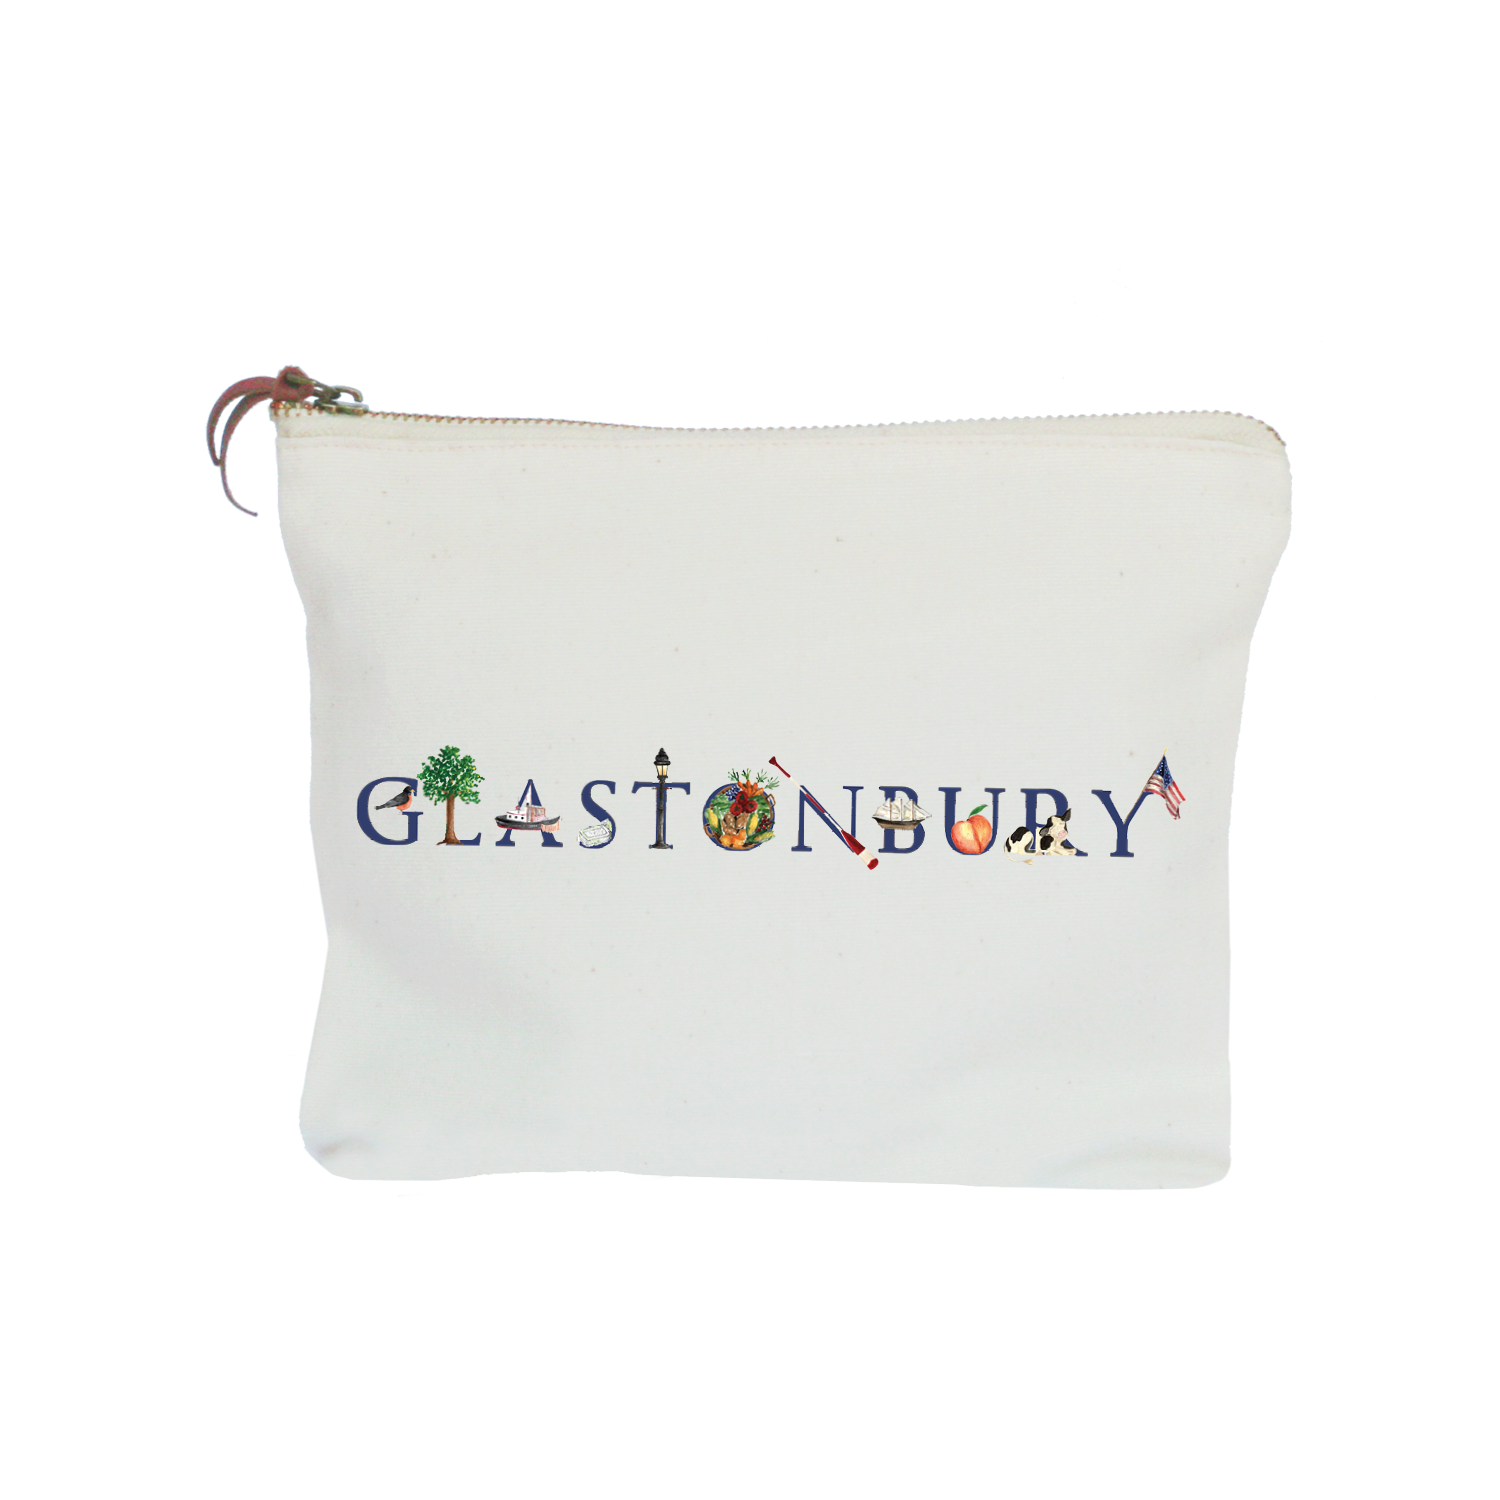 Glastonbury zipper pouch